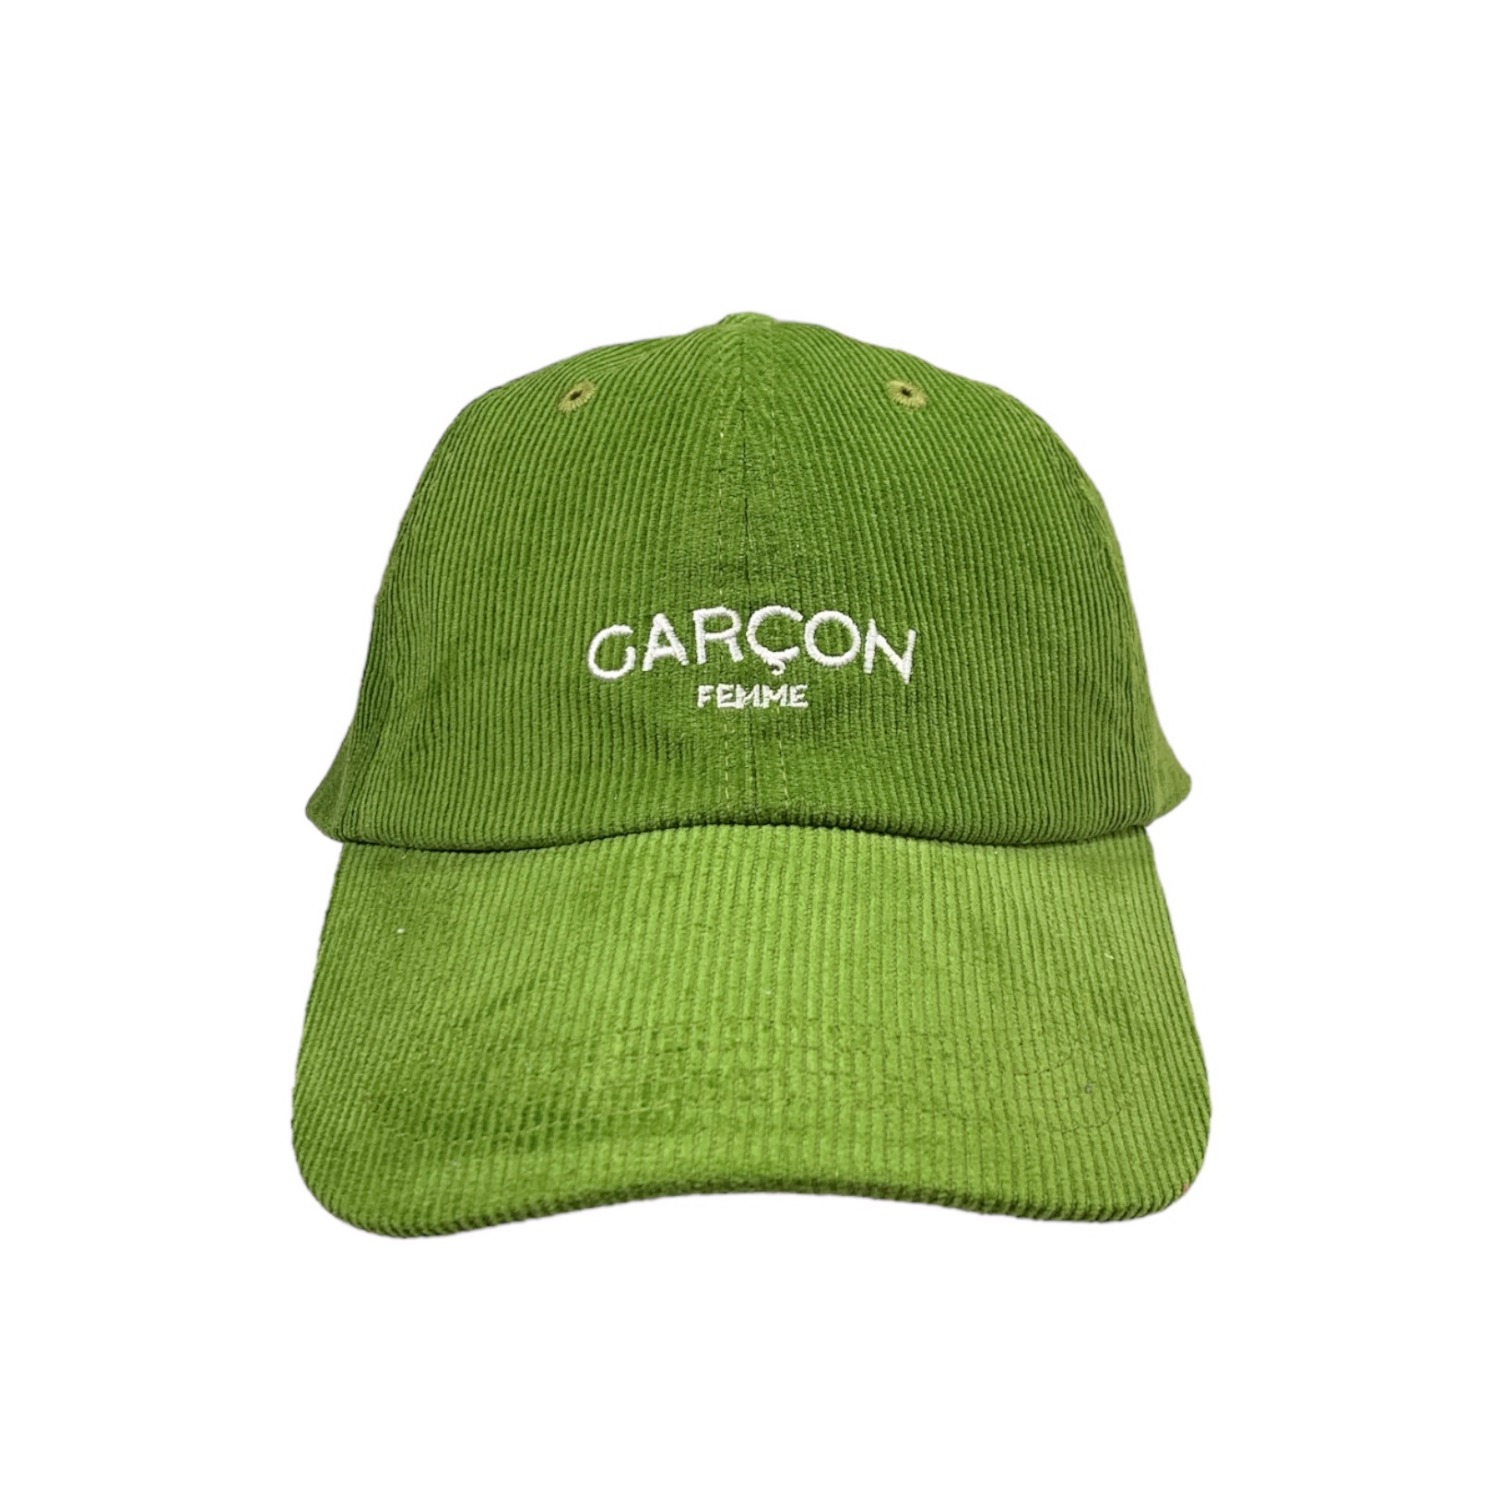 Garcon Cap - Femme (Shamrock Green)